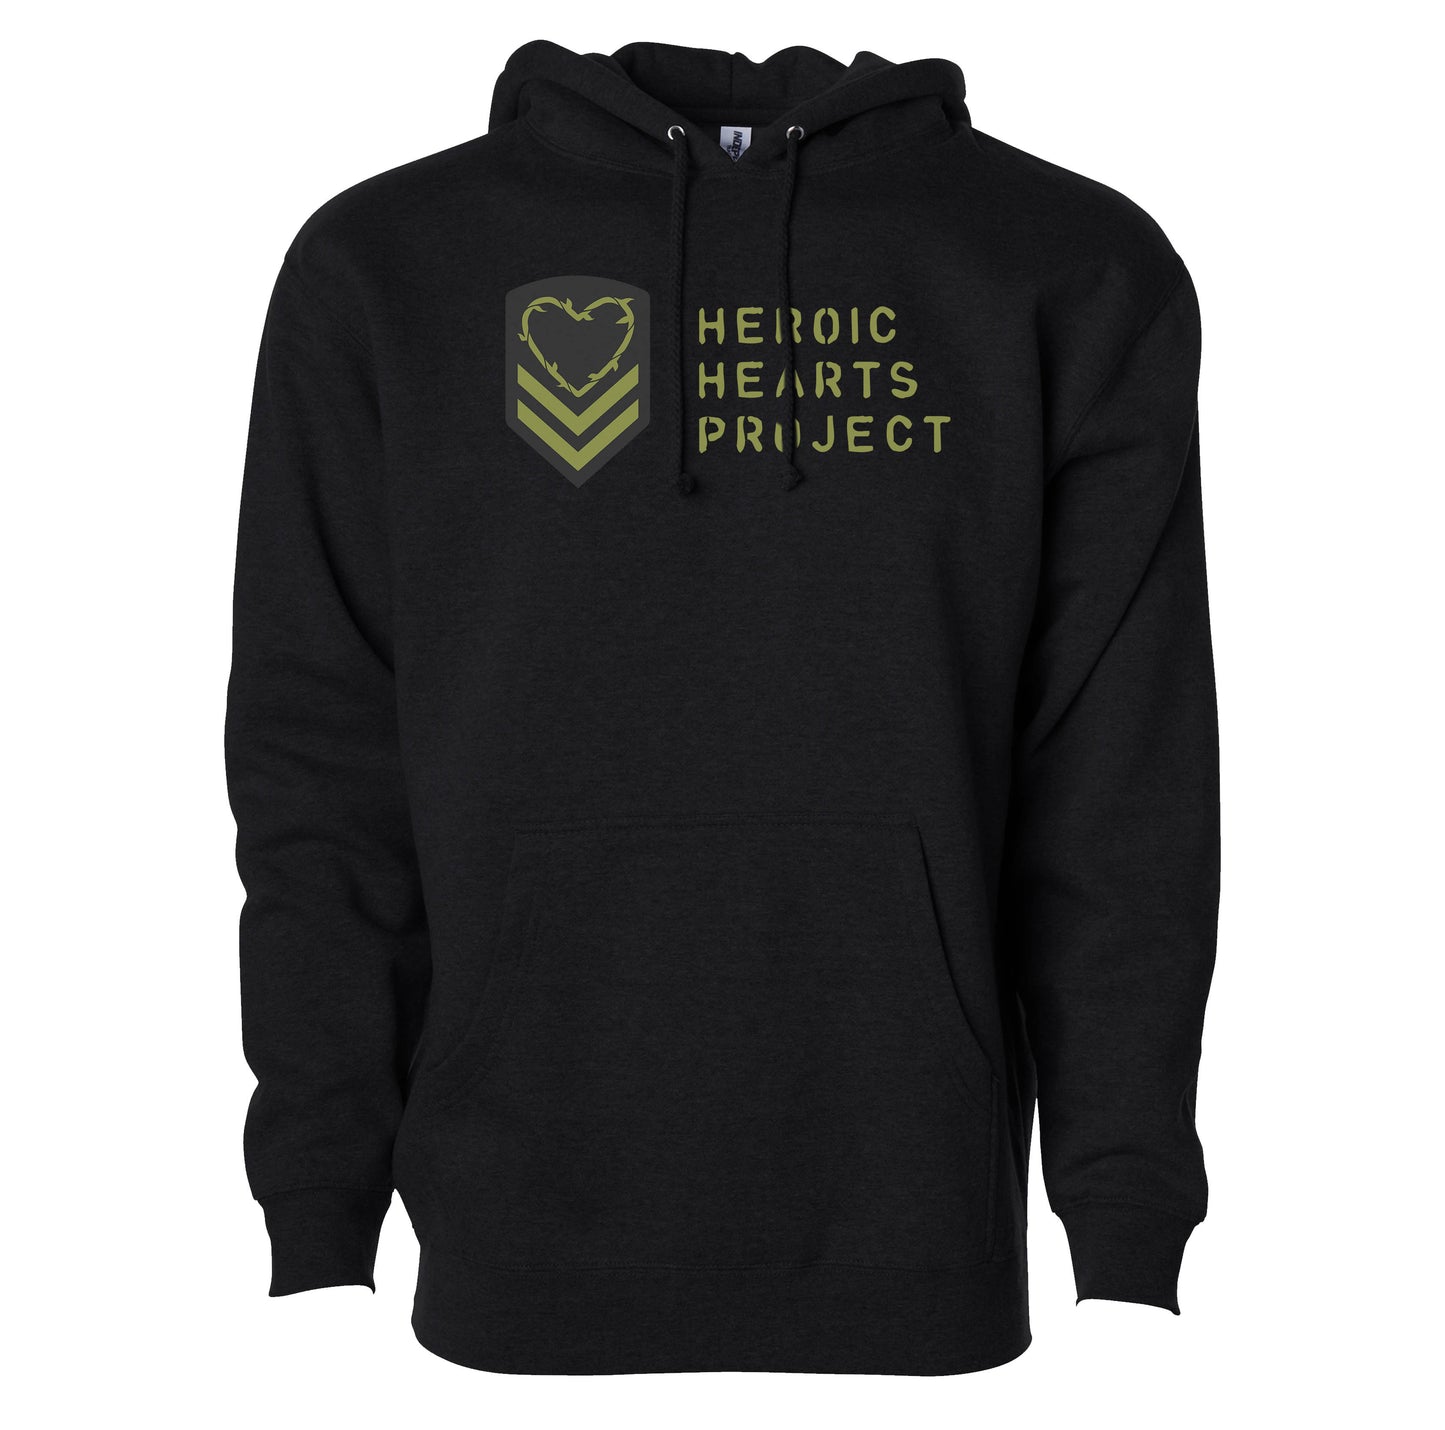 Heroic Hearts Project Hoodie